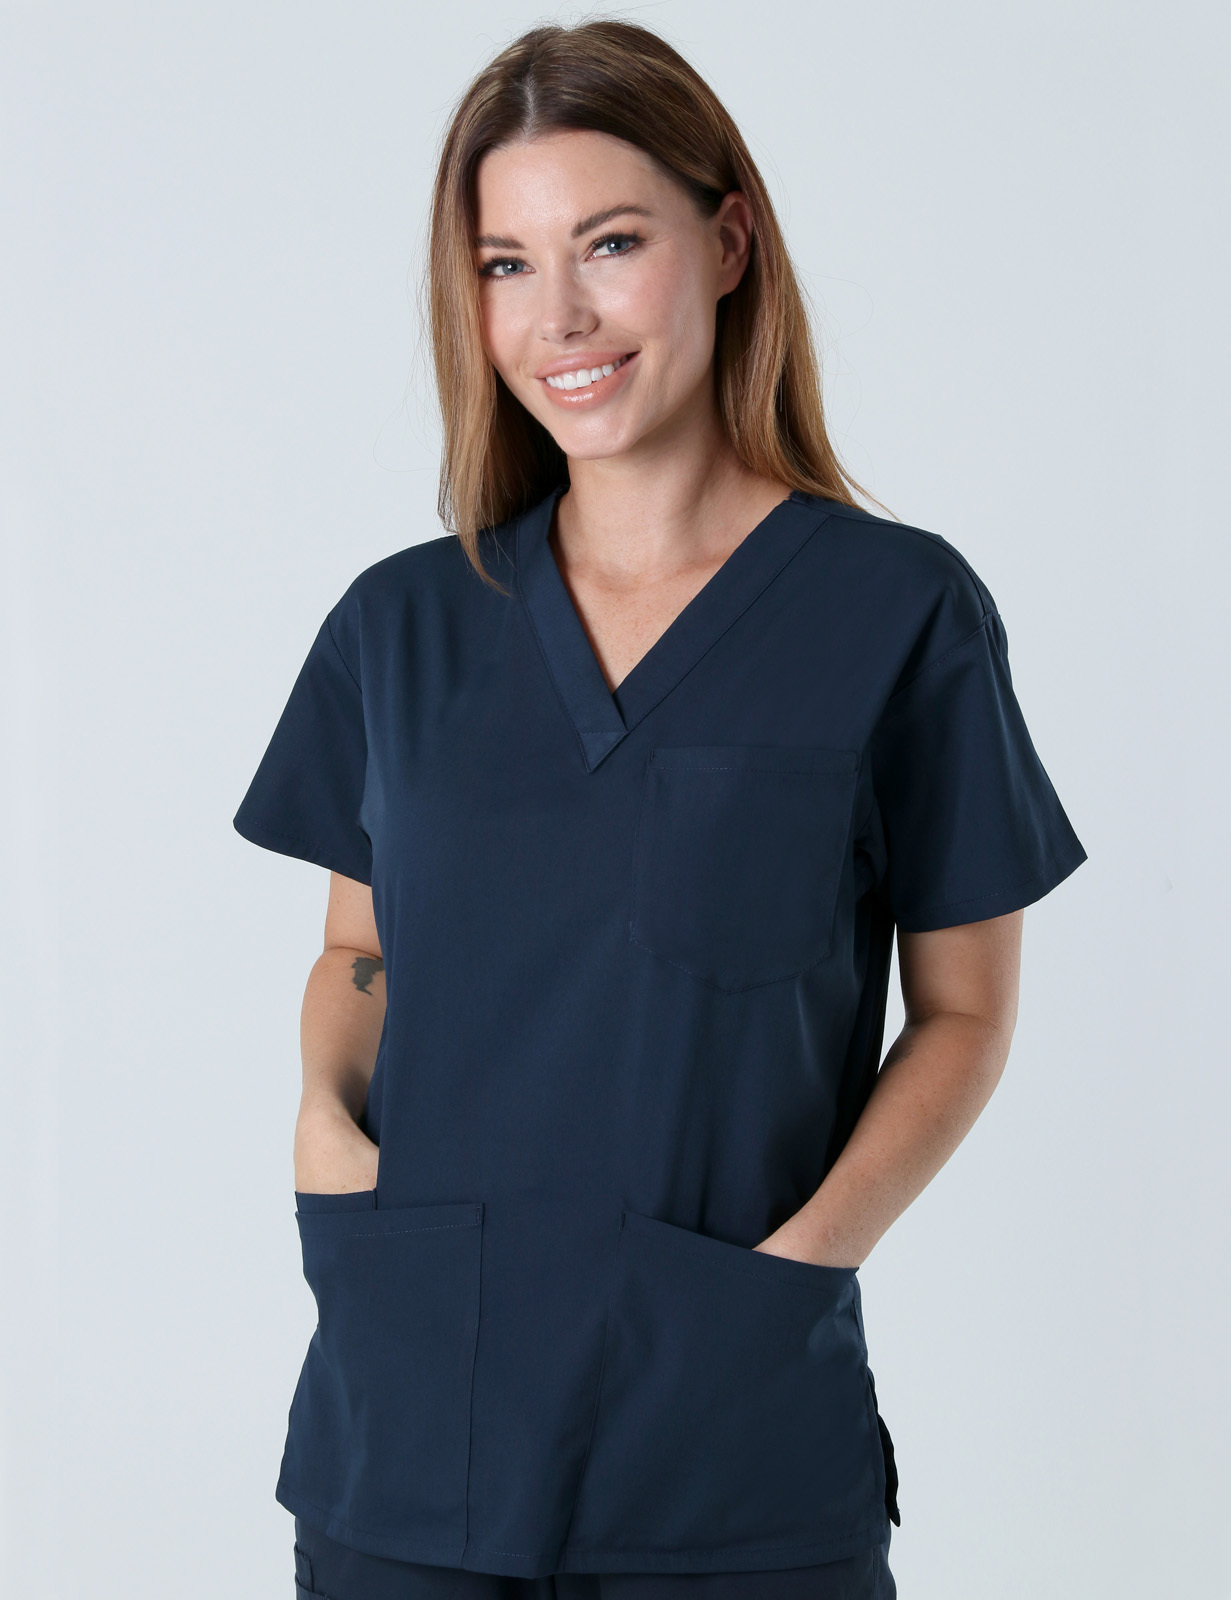 Ipswich Hospital Nurse - Ward 7B Uniform Set Bundle (4 Pocket Top and Cargo Pants in Navy incl Logos)